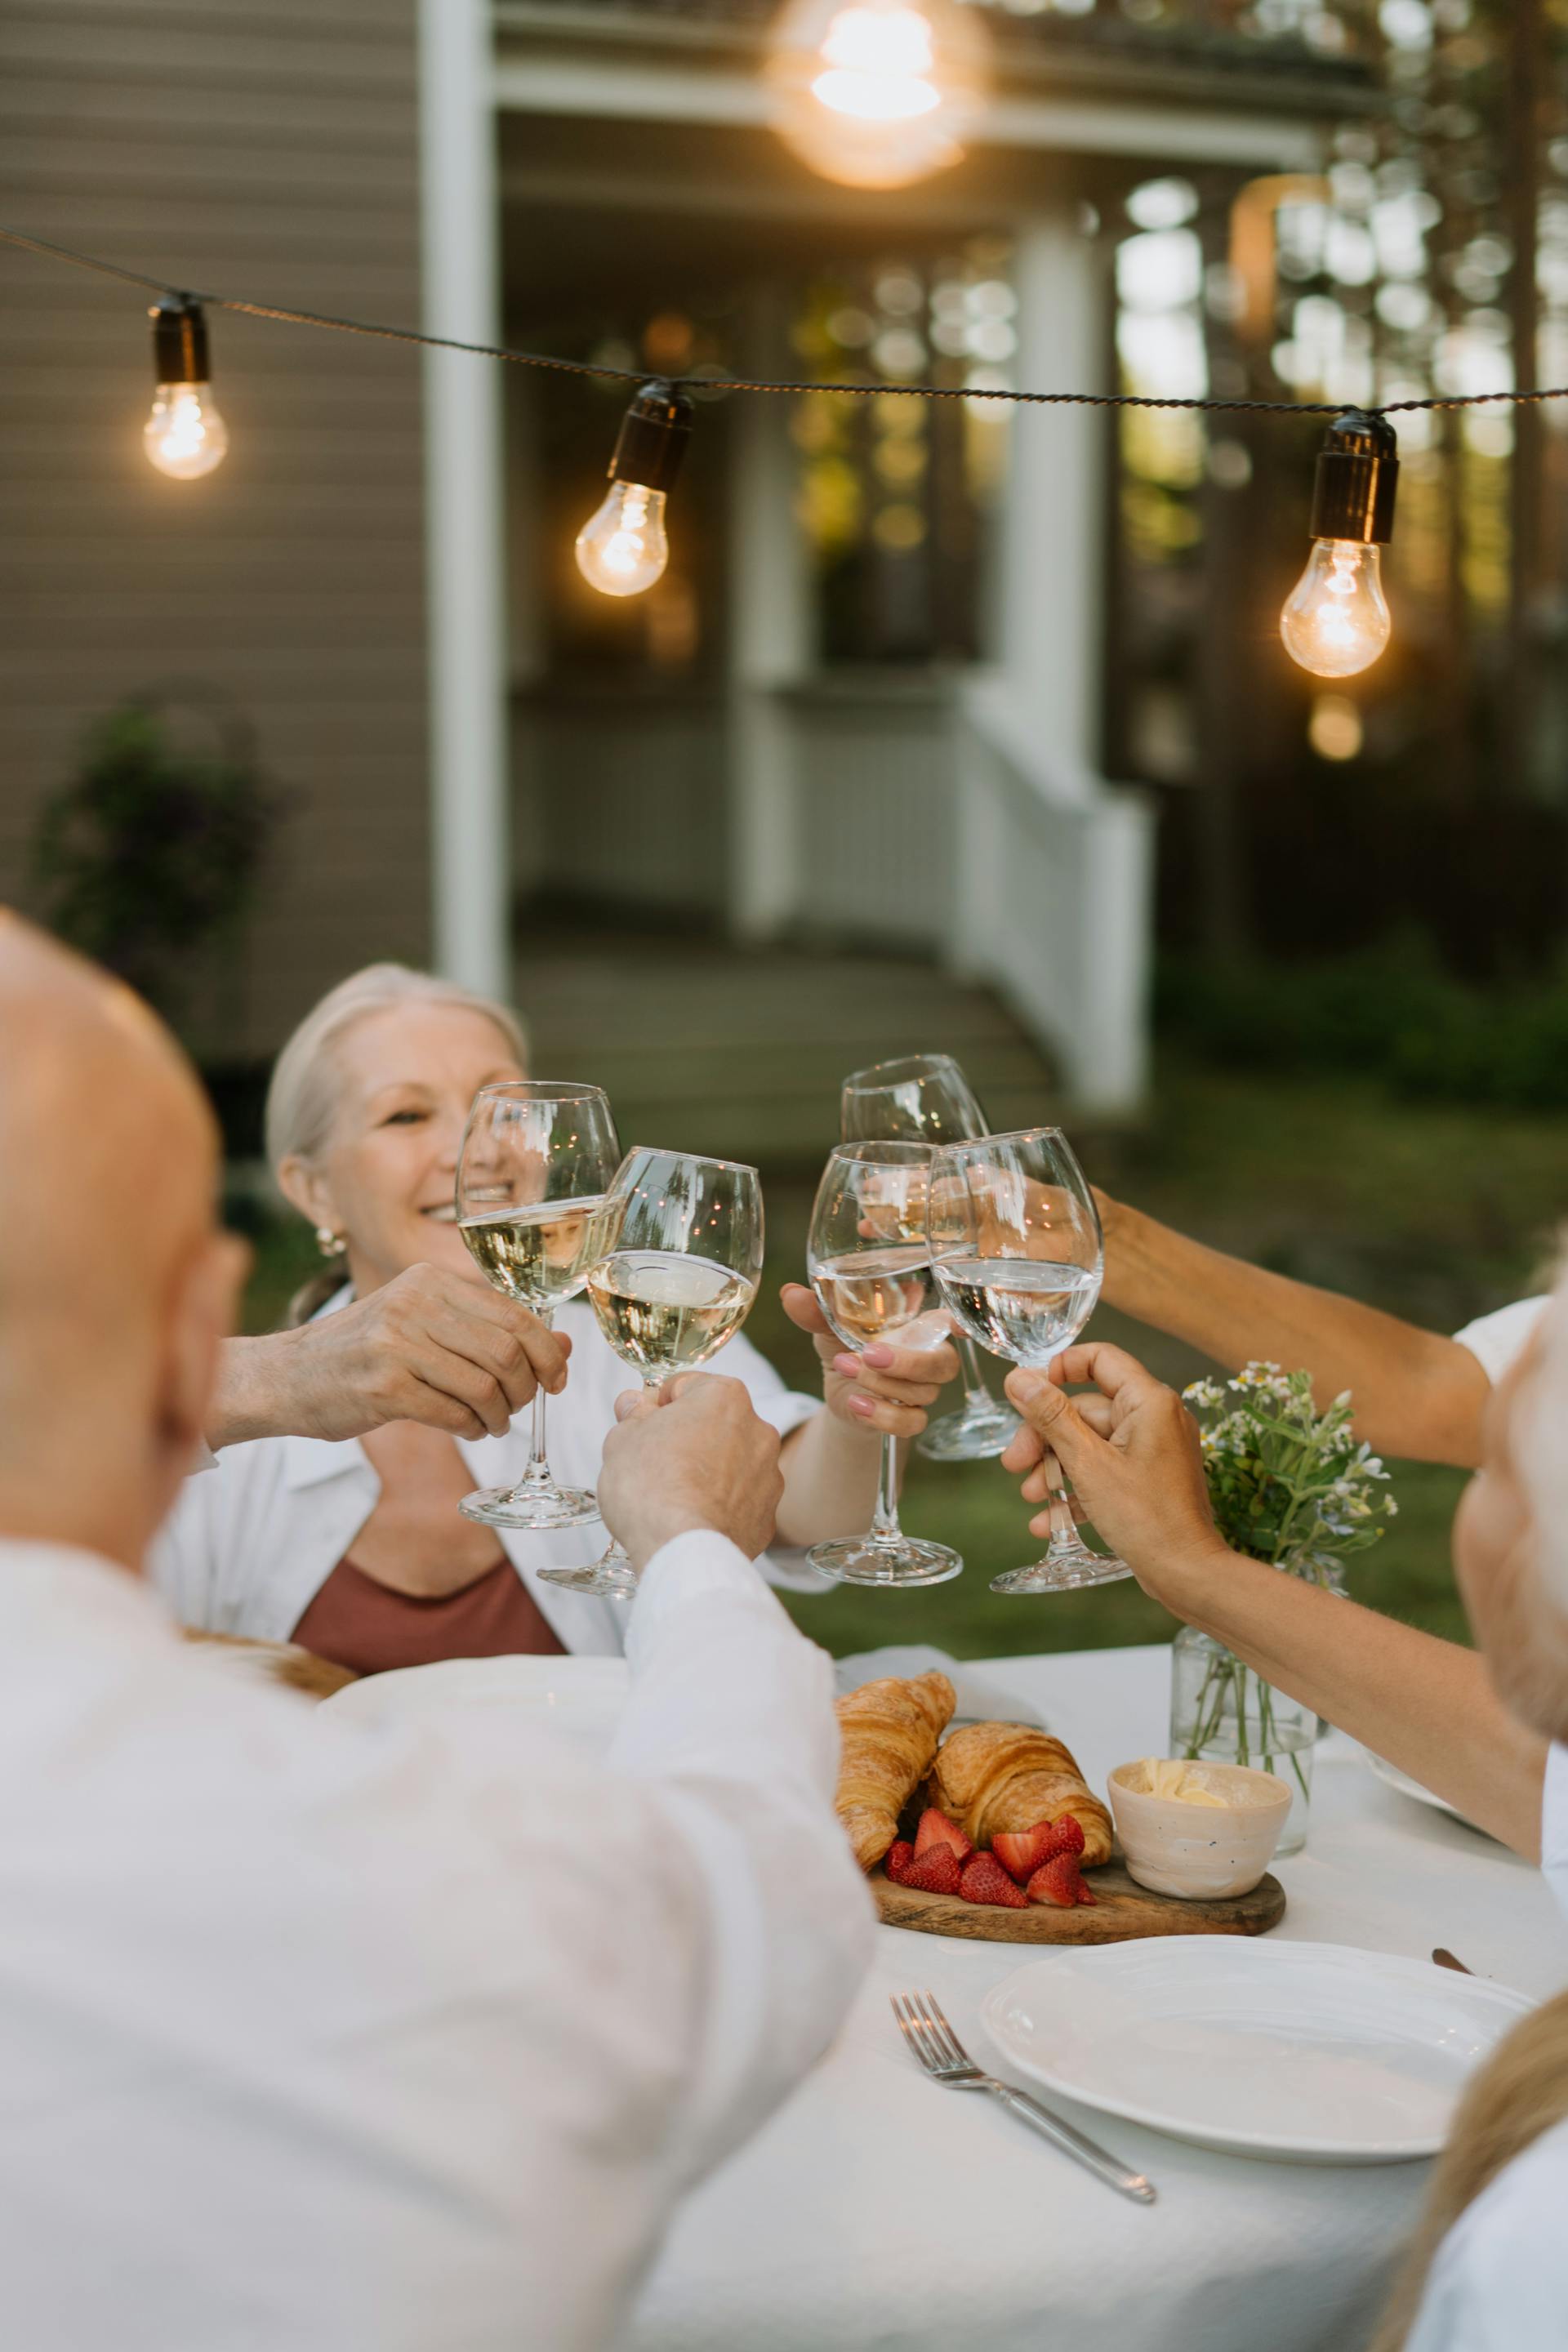 Family members raising their glasses during dinner | Source: Pexels